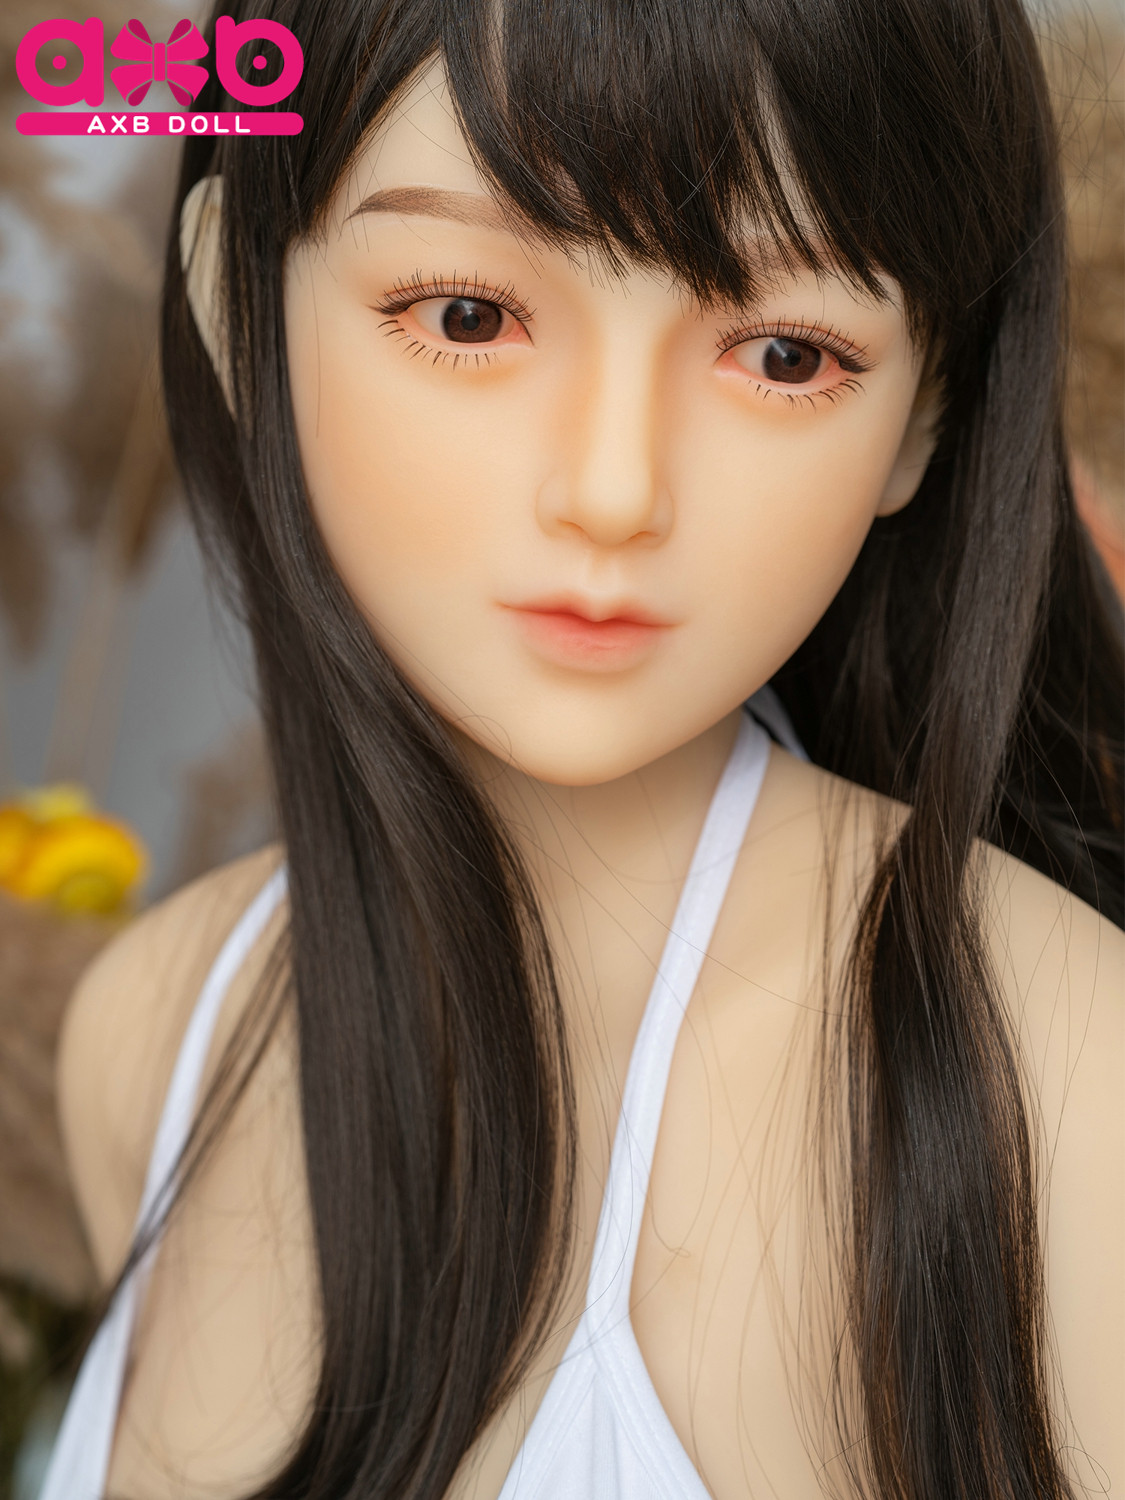 AXBDOLL 160cm A139# TPE AnimeLove Doll Life Size Sex Dolls - 画像をクリックして閉じます